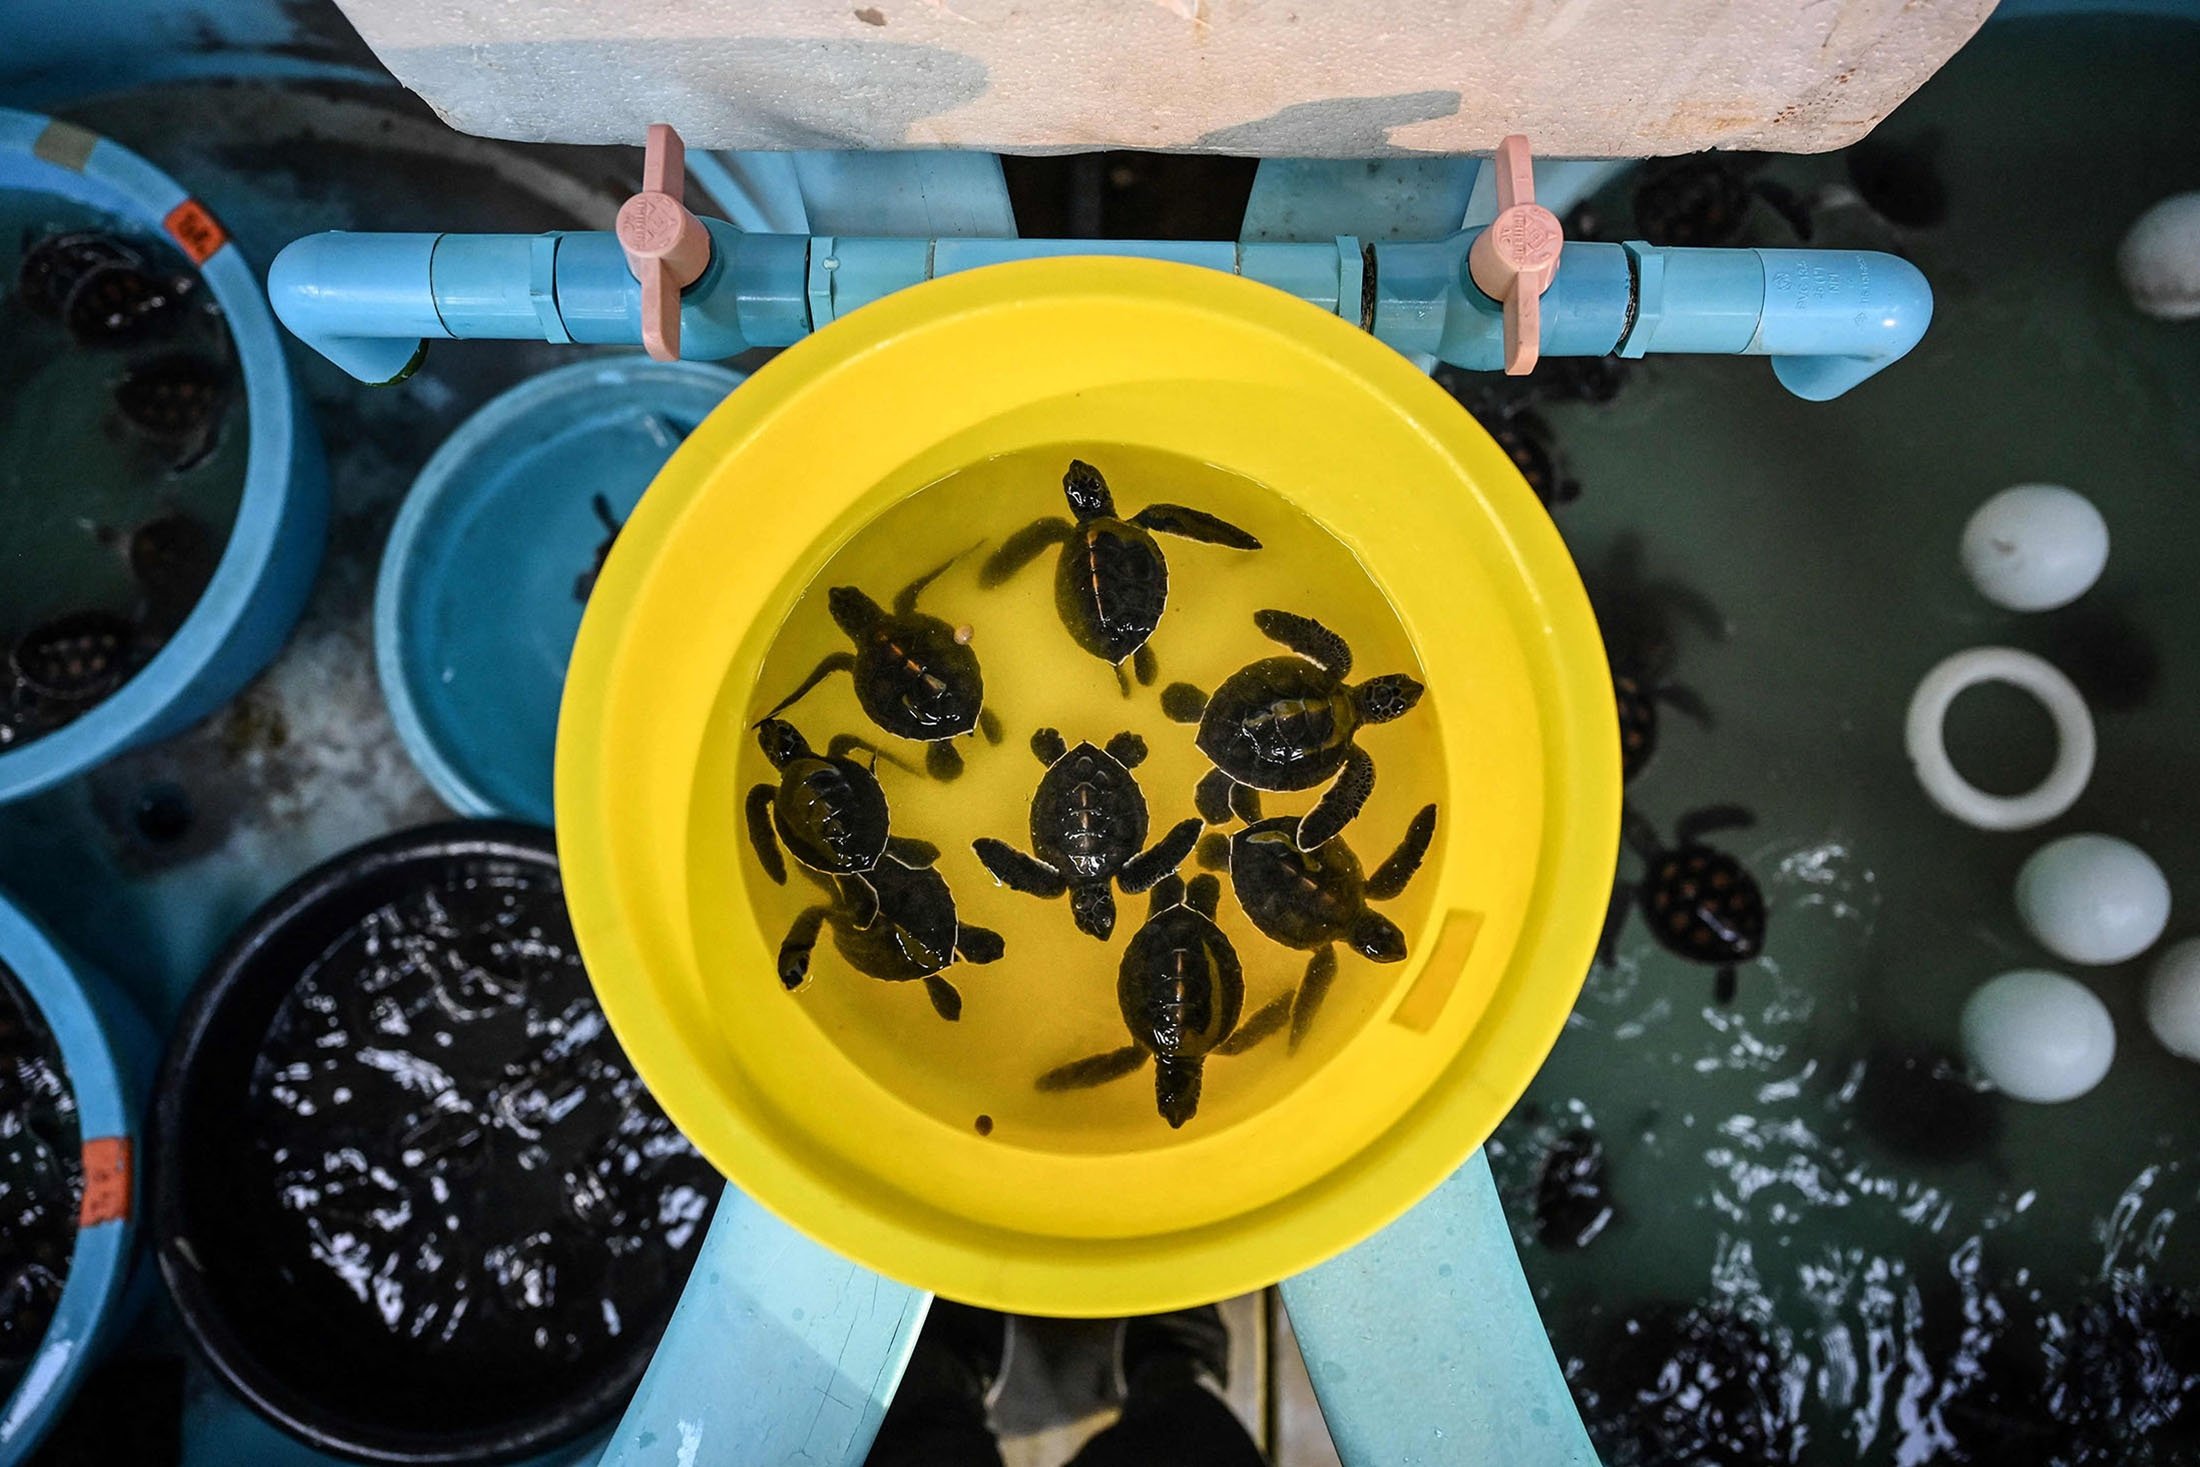 Baby sea turtles are raised at the Phuket Marine Biological Center in Phuket, Thailand, Nov. 23, 2021. (AFP Photo)